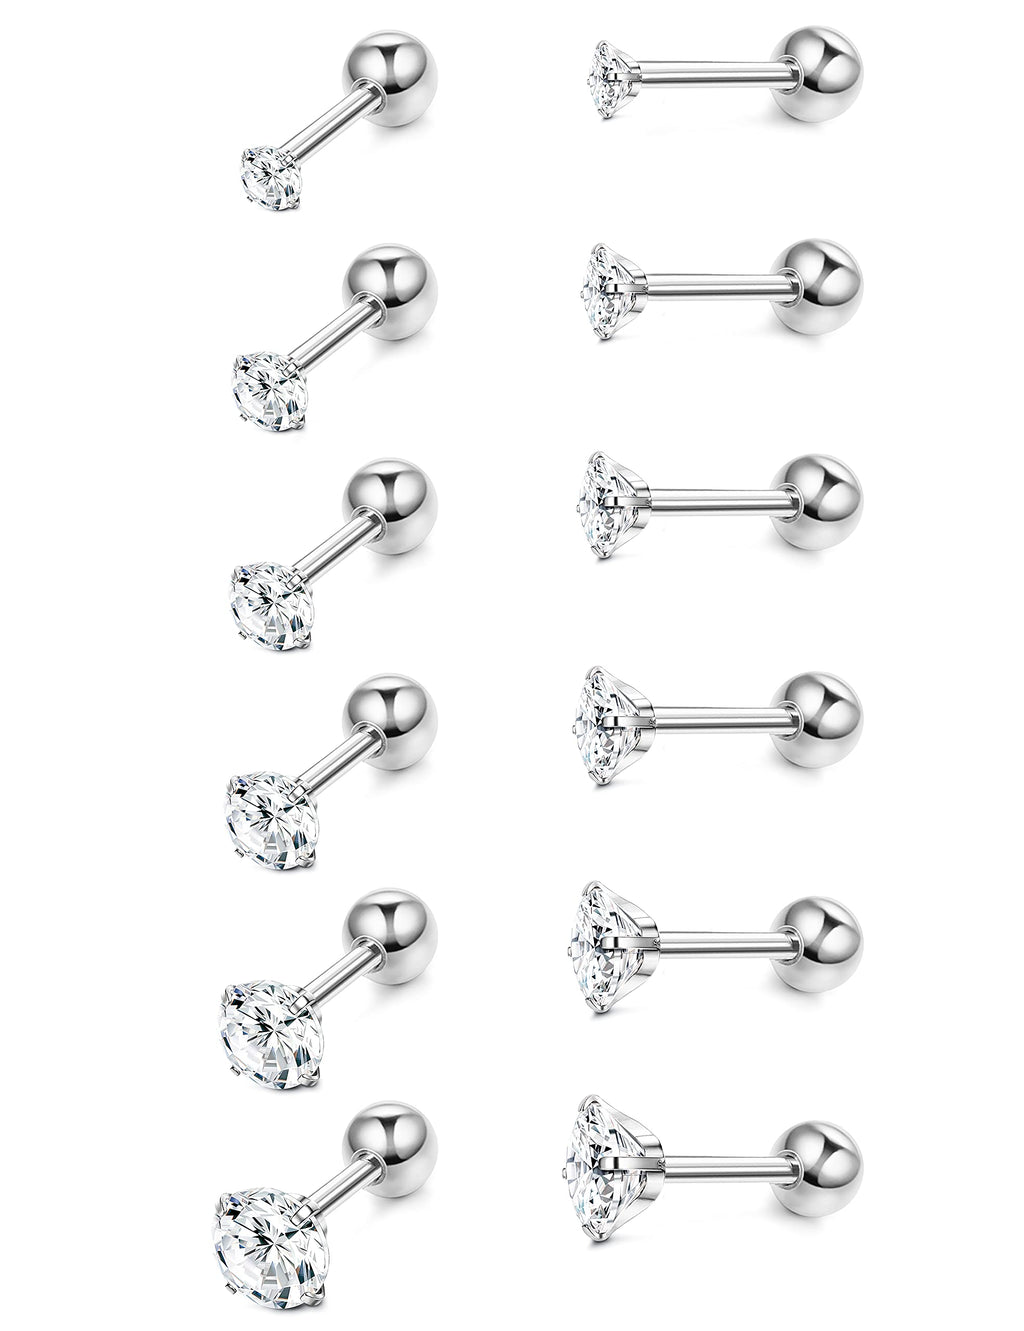 [Australia] - MILACOLATO 6 Pairs 18G Stainless Steel CZ Stud Earrings for Women Men Cartilage Helix Earrings Set Round Cubic Zirconia Screwback Flat Ball Back Stud Ear Piercing Ball-Silver 